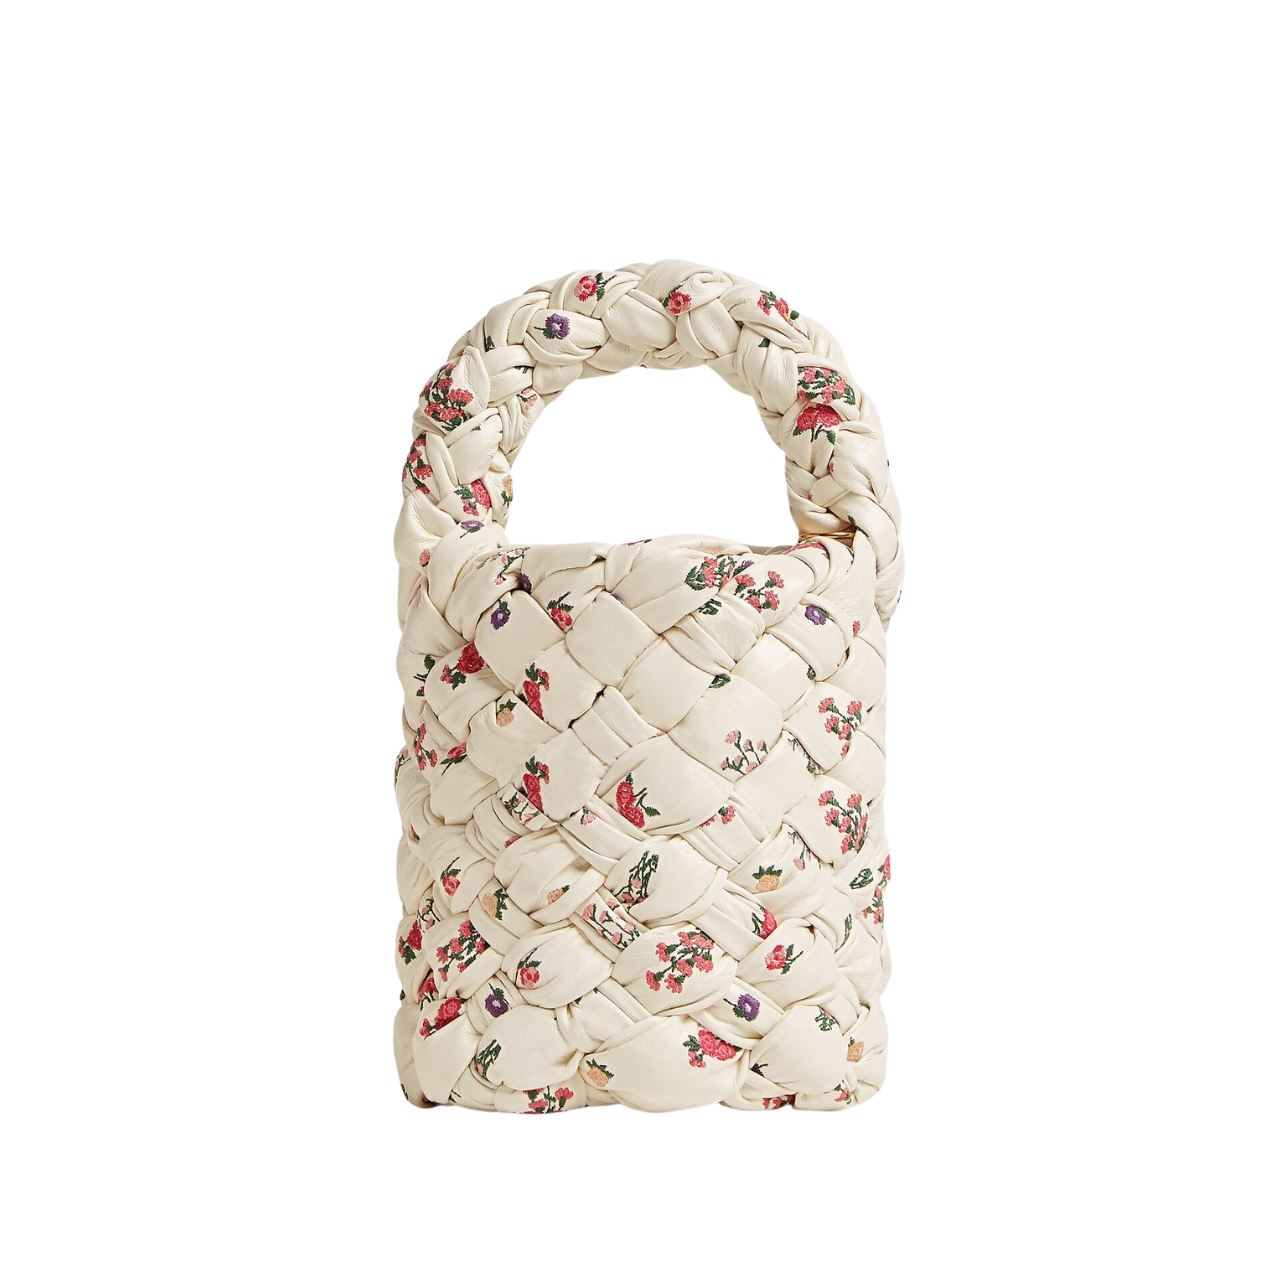 Bottega Veneta woven cream leather bag with small floral print detail